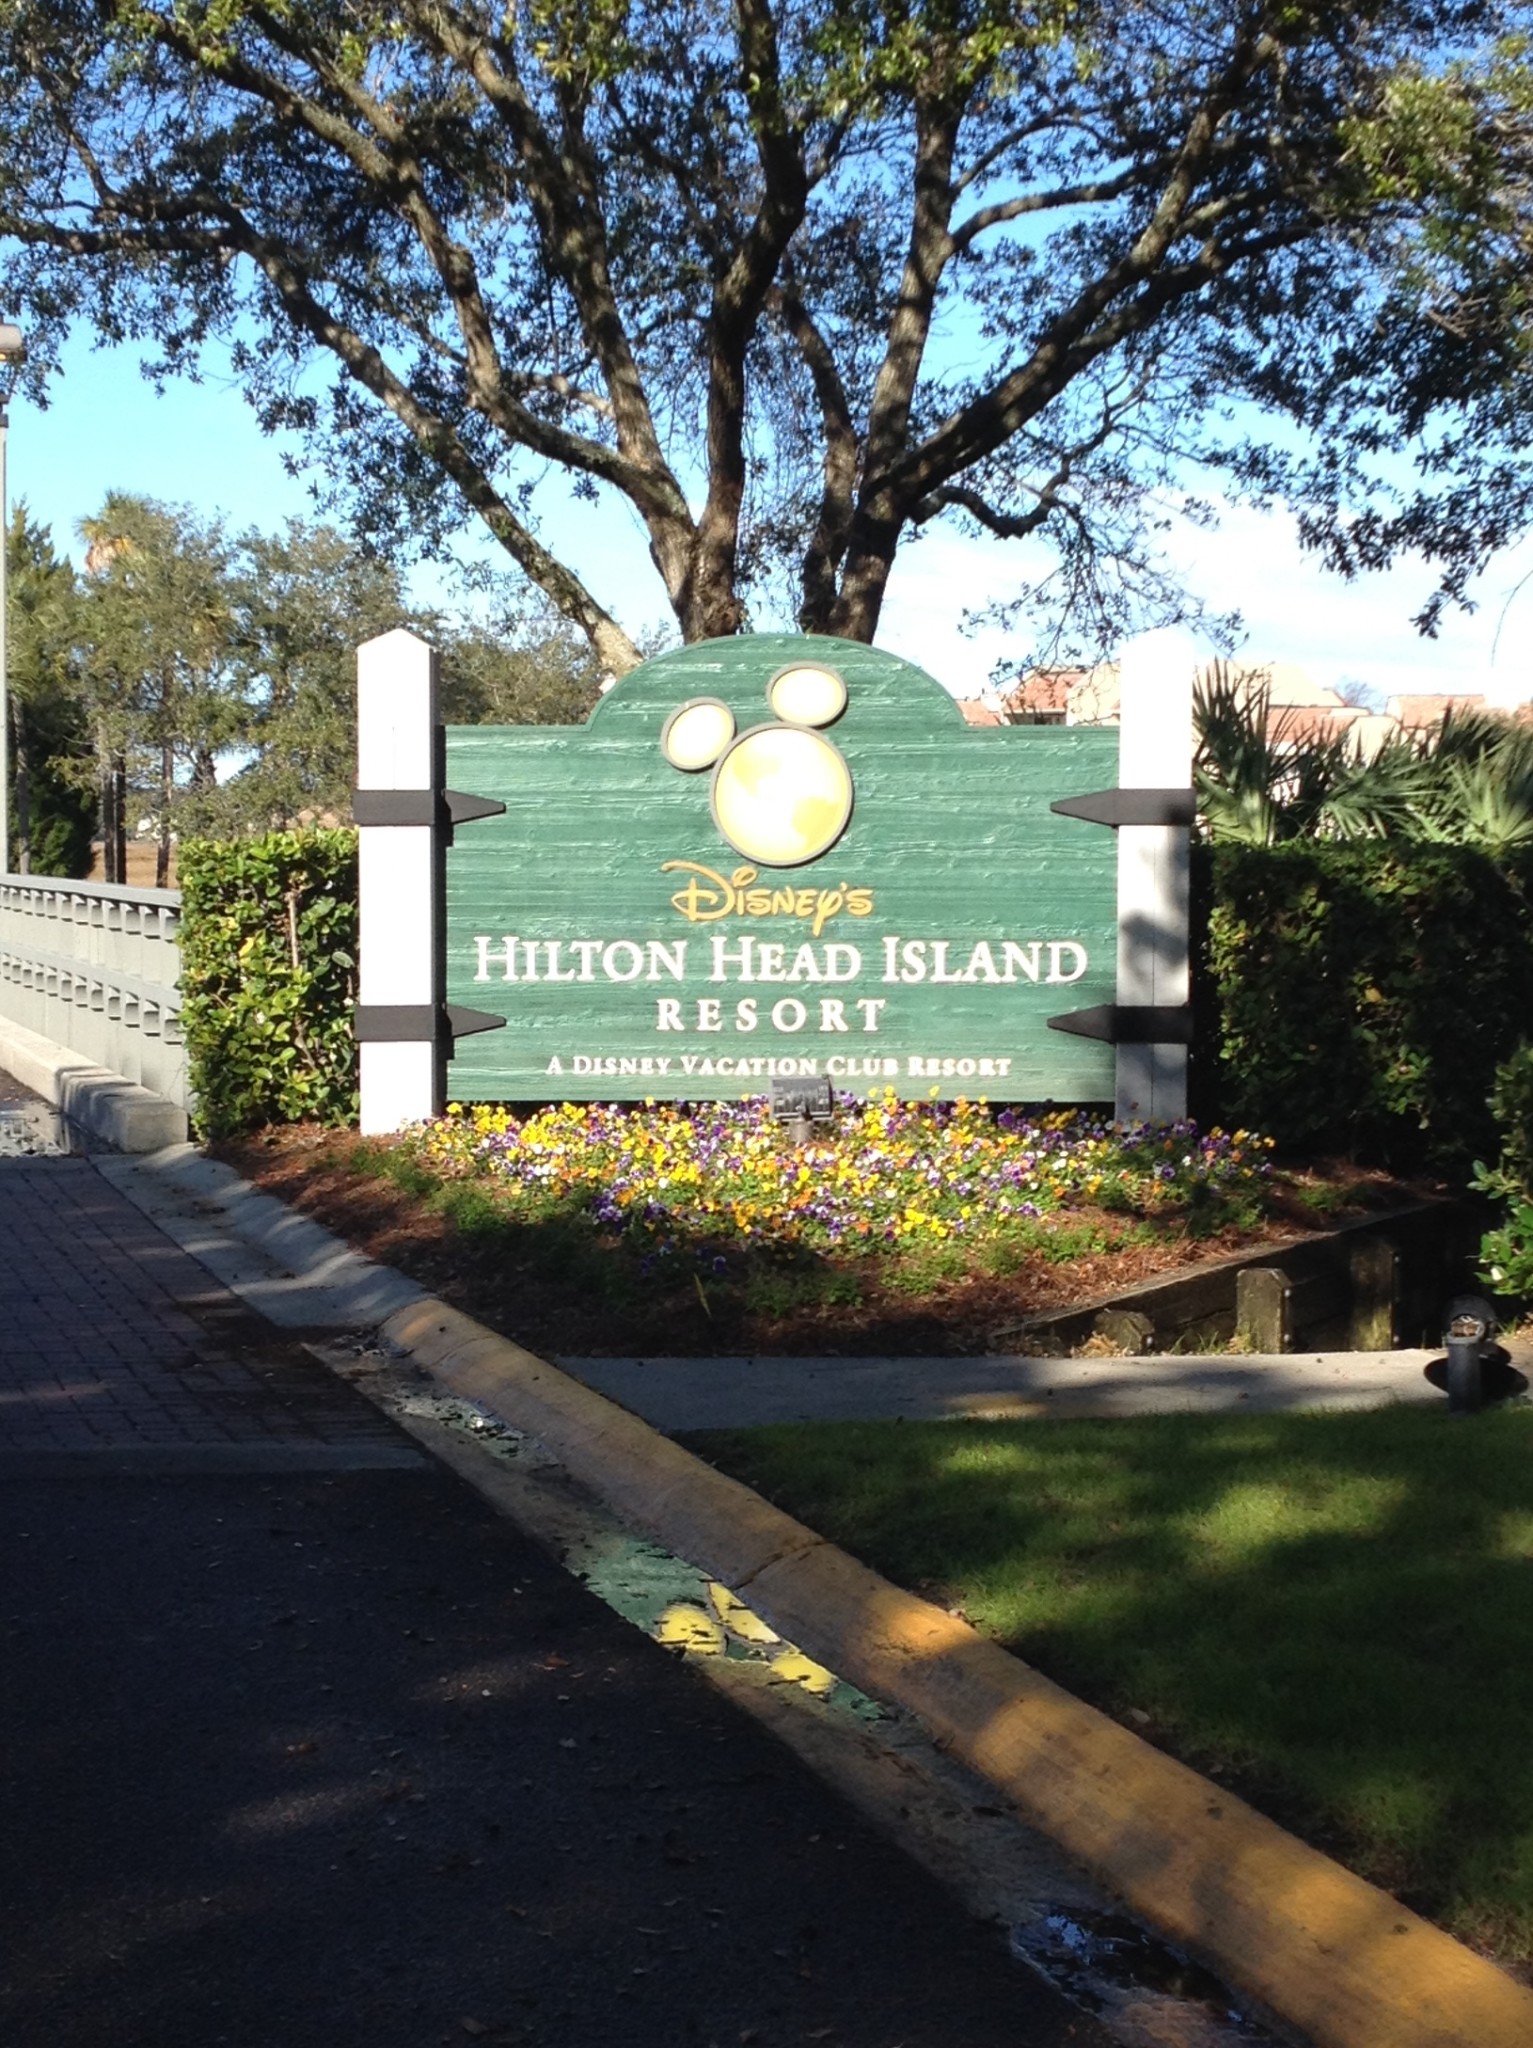 Disney’s Hilton Head Island Resort Reopens after Hurricane Florence